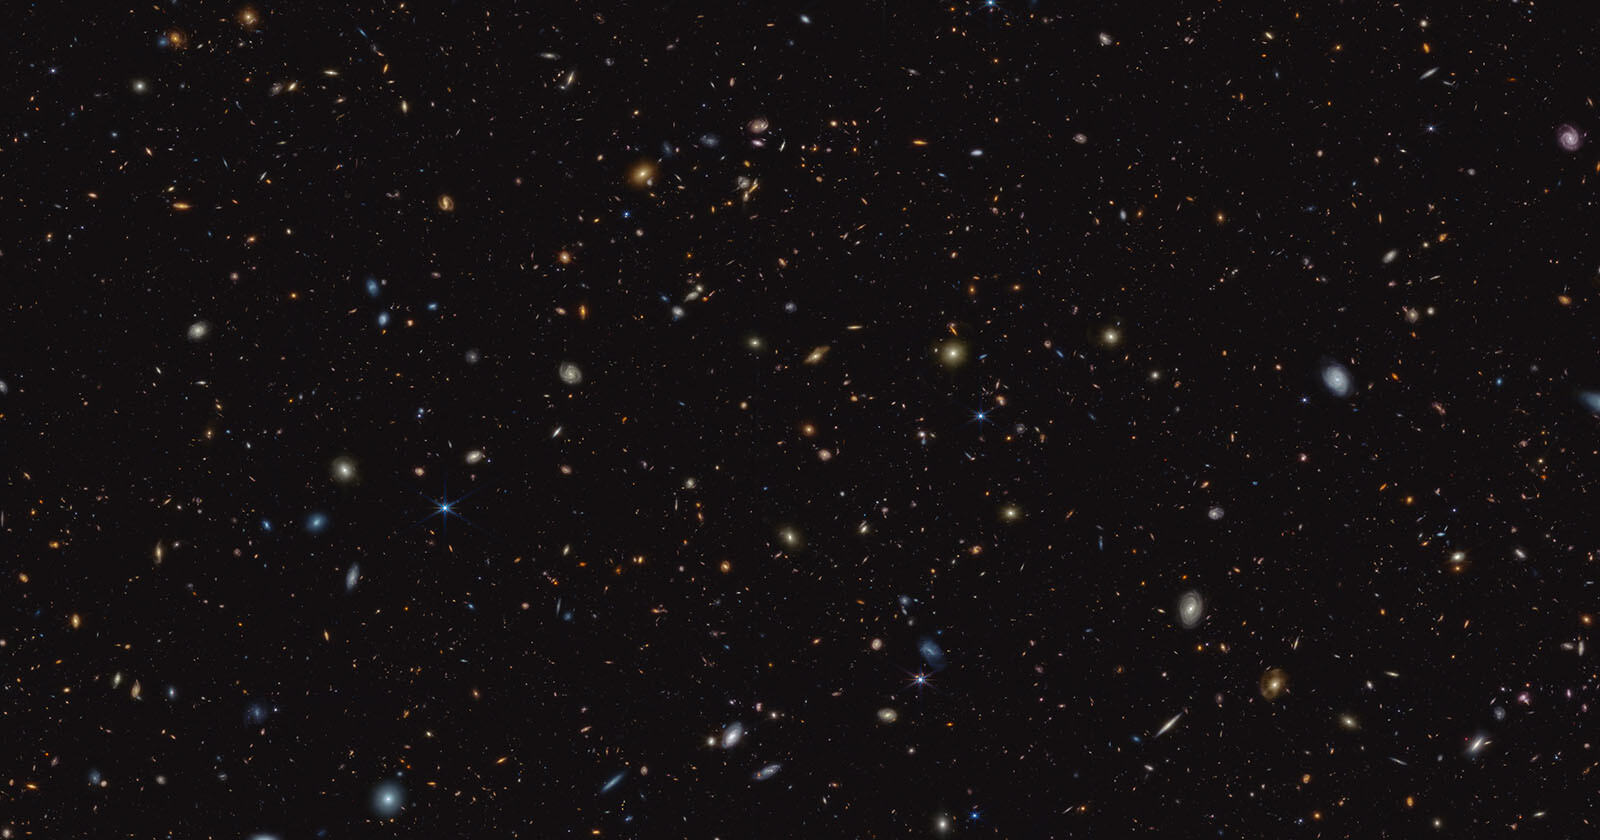  000 galaxies sparkle james webb telescope photo 